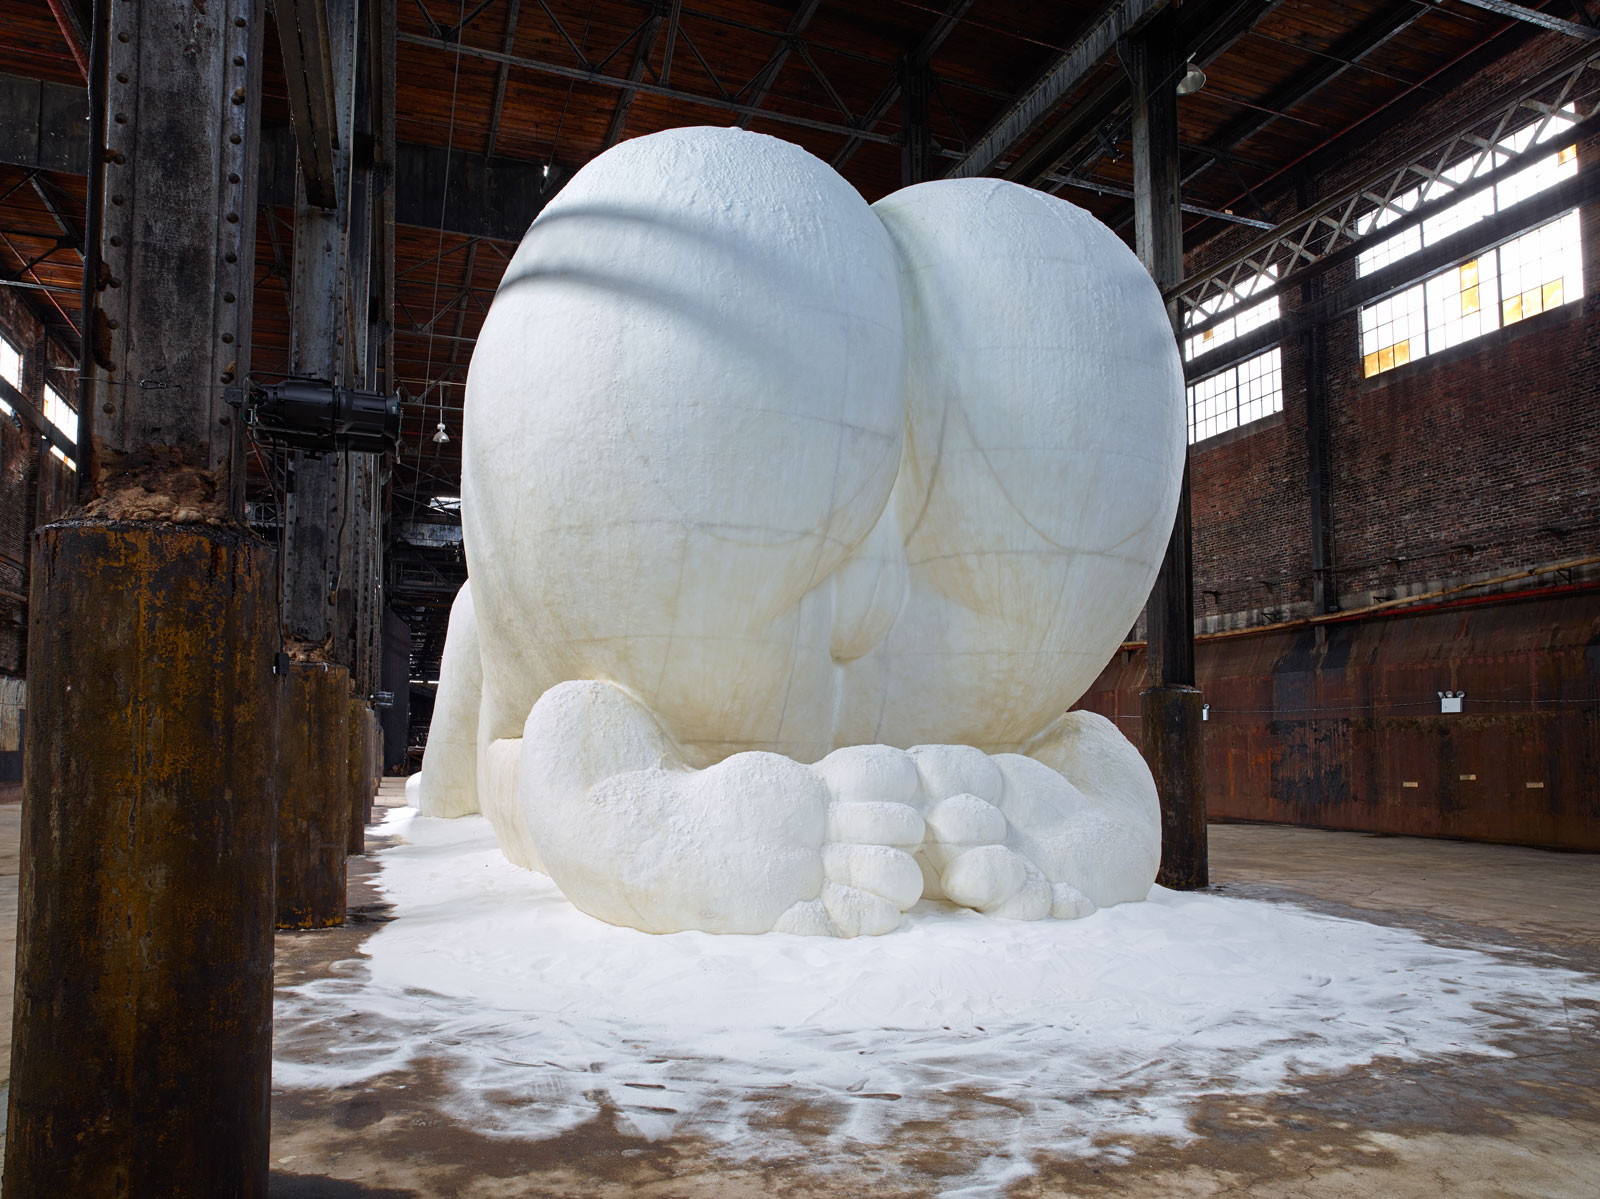 Kara Walker's sculpture of a mammy figure made from sugar, shown from behind